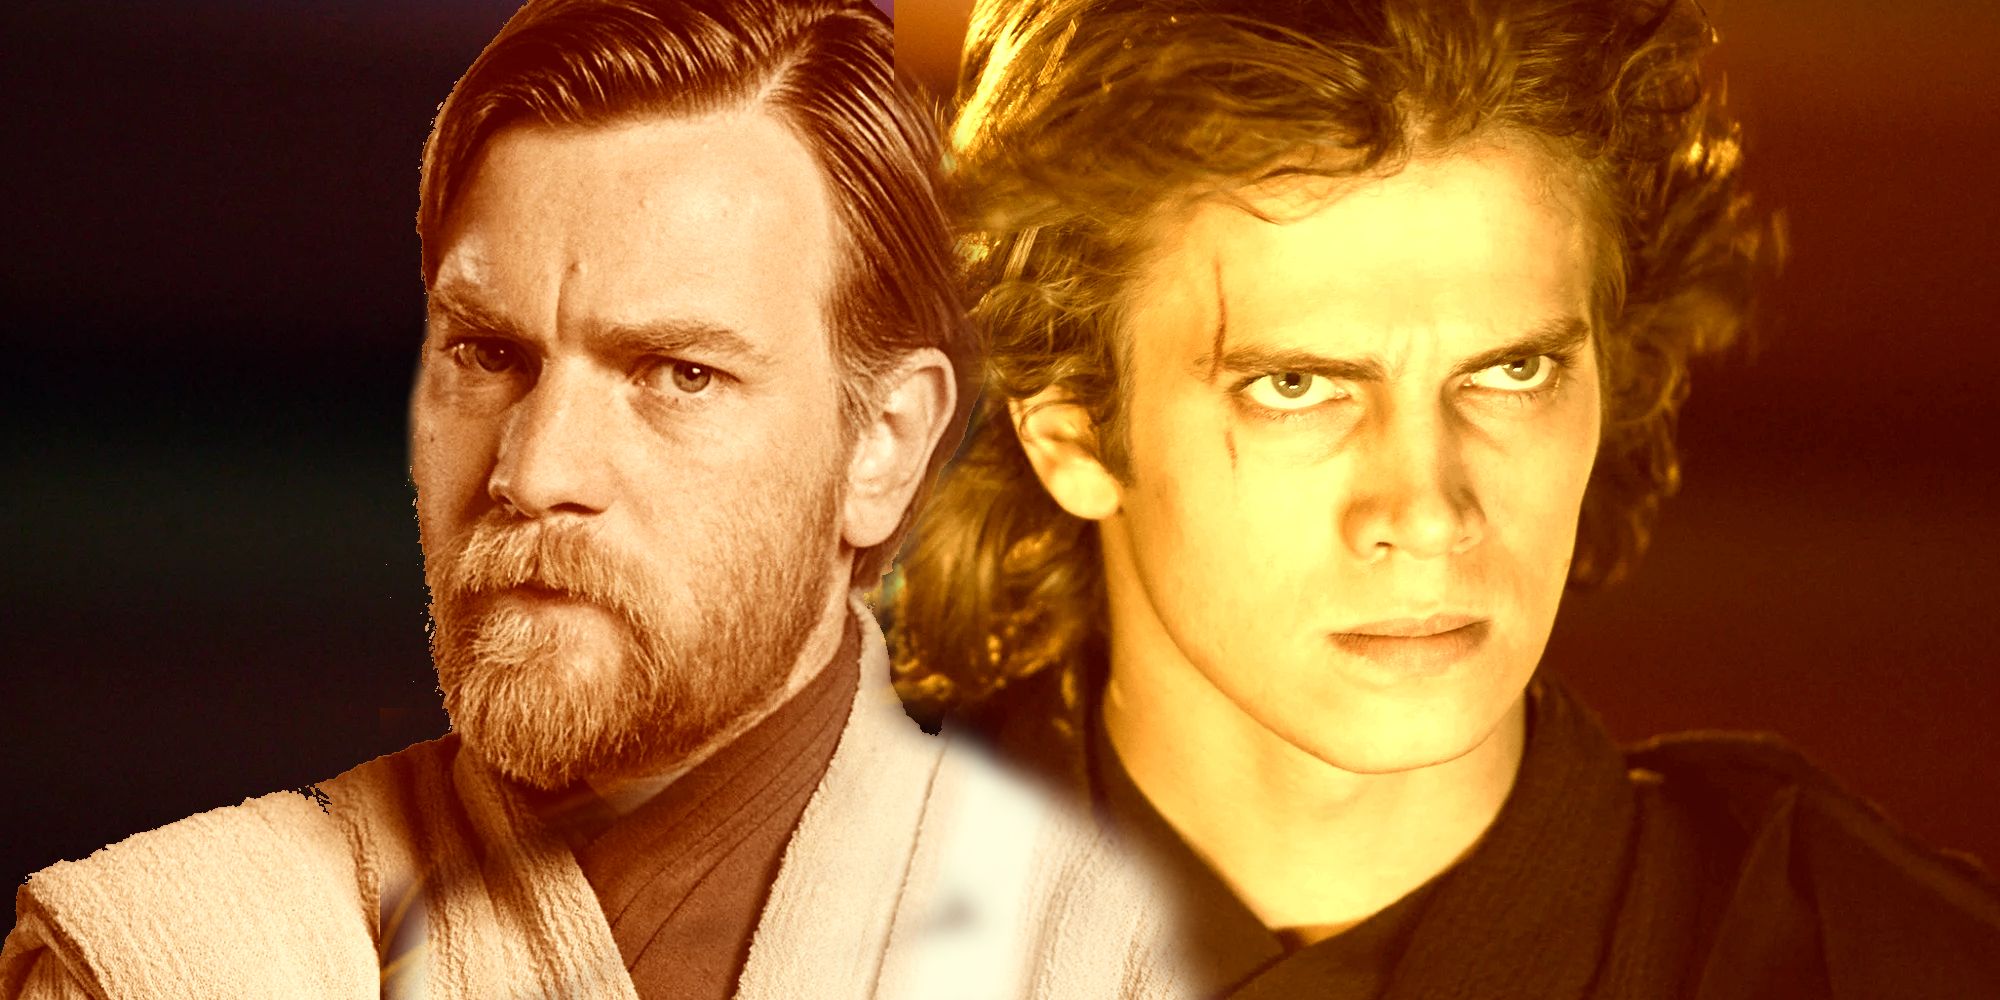 Ewan McGregor as Obi-Wan Kenobi and Hayden Christensen as Anakin Skywalker in Revenge of the Sith